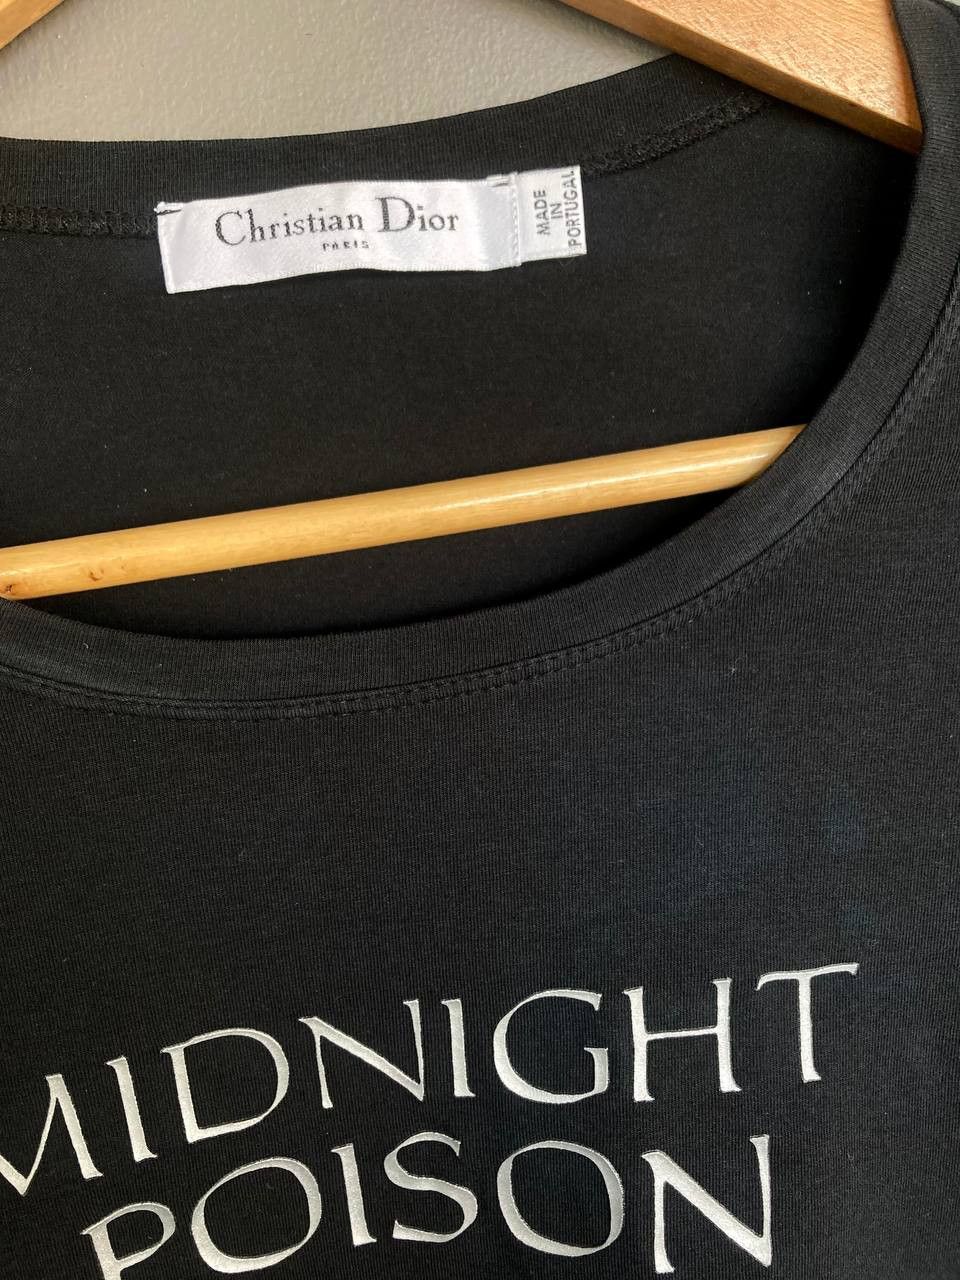 Christian Dior Monsieur - Christian Dior “Midnight Poison” Long Sleeves - 8